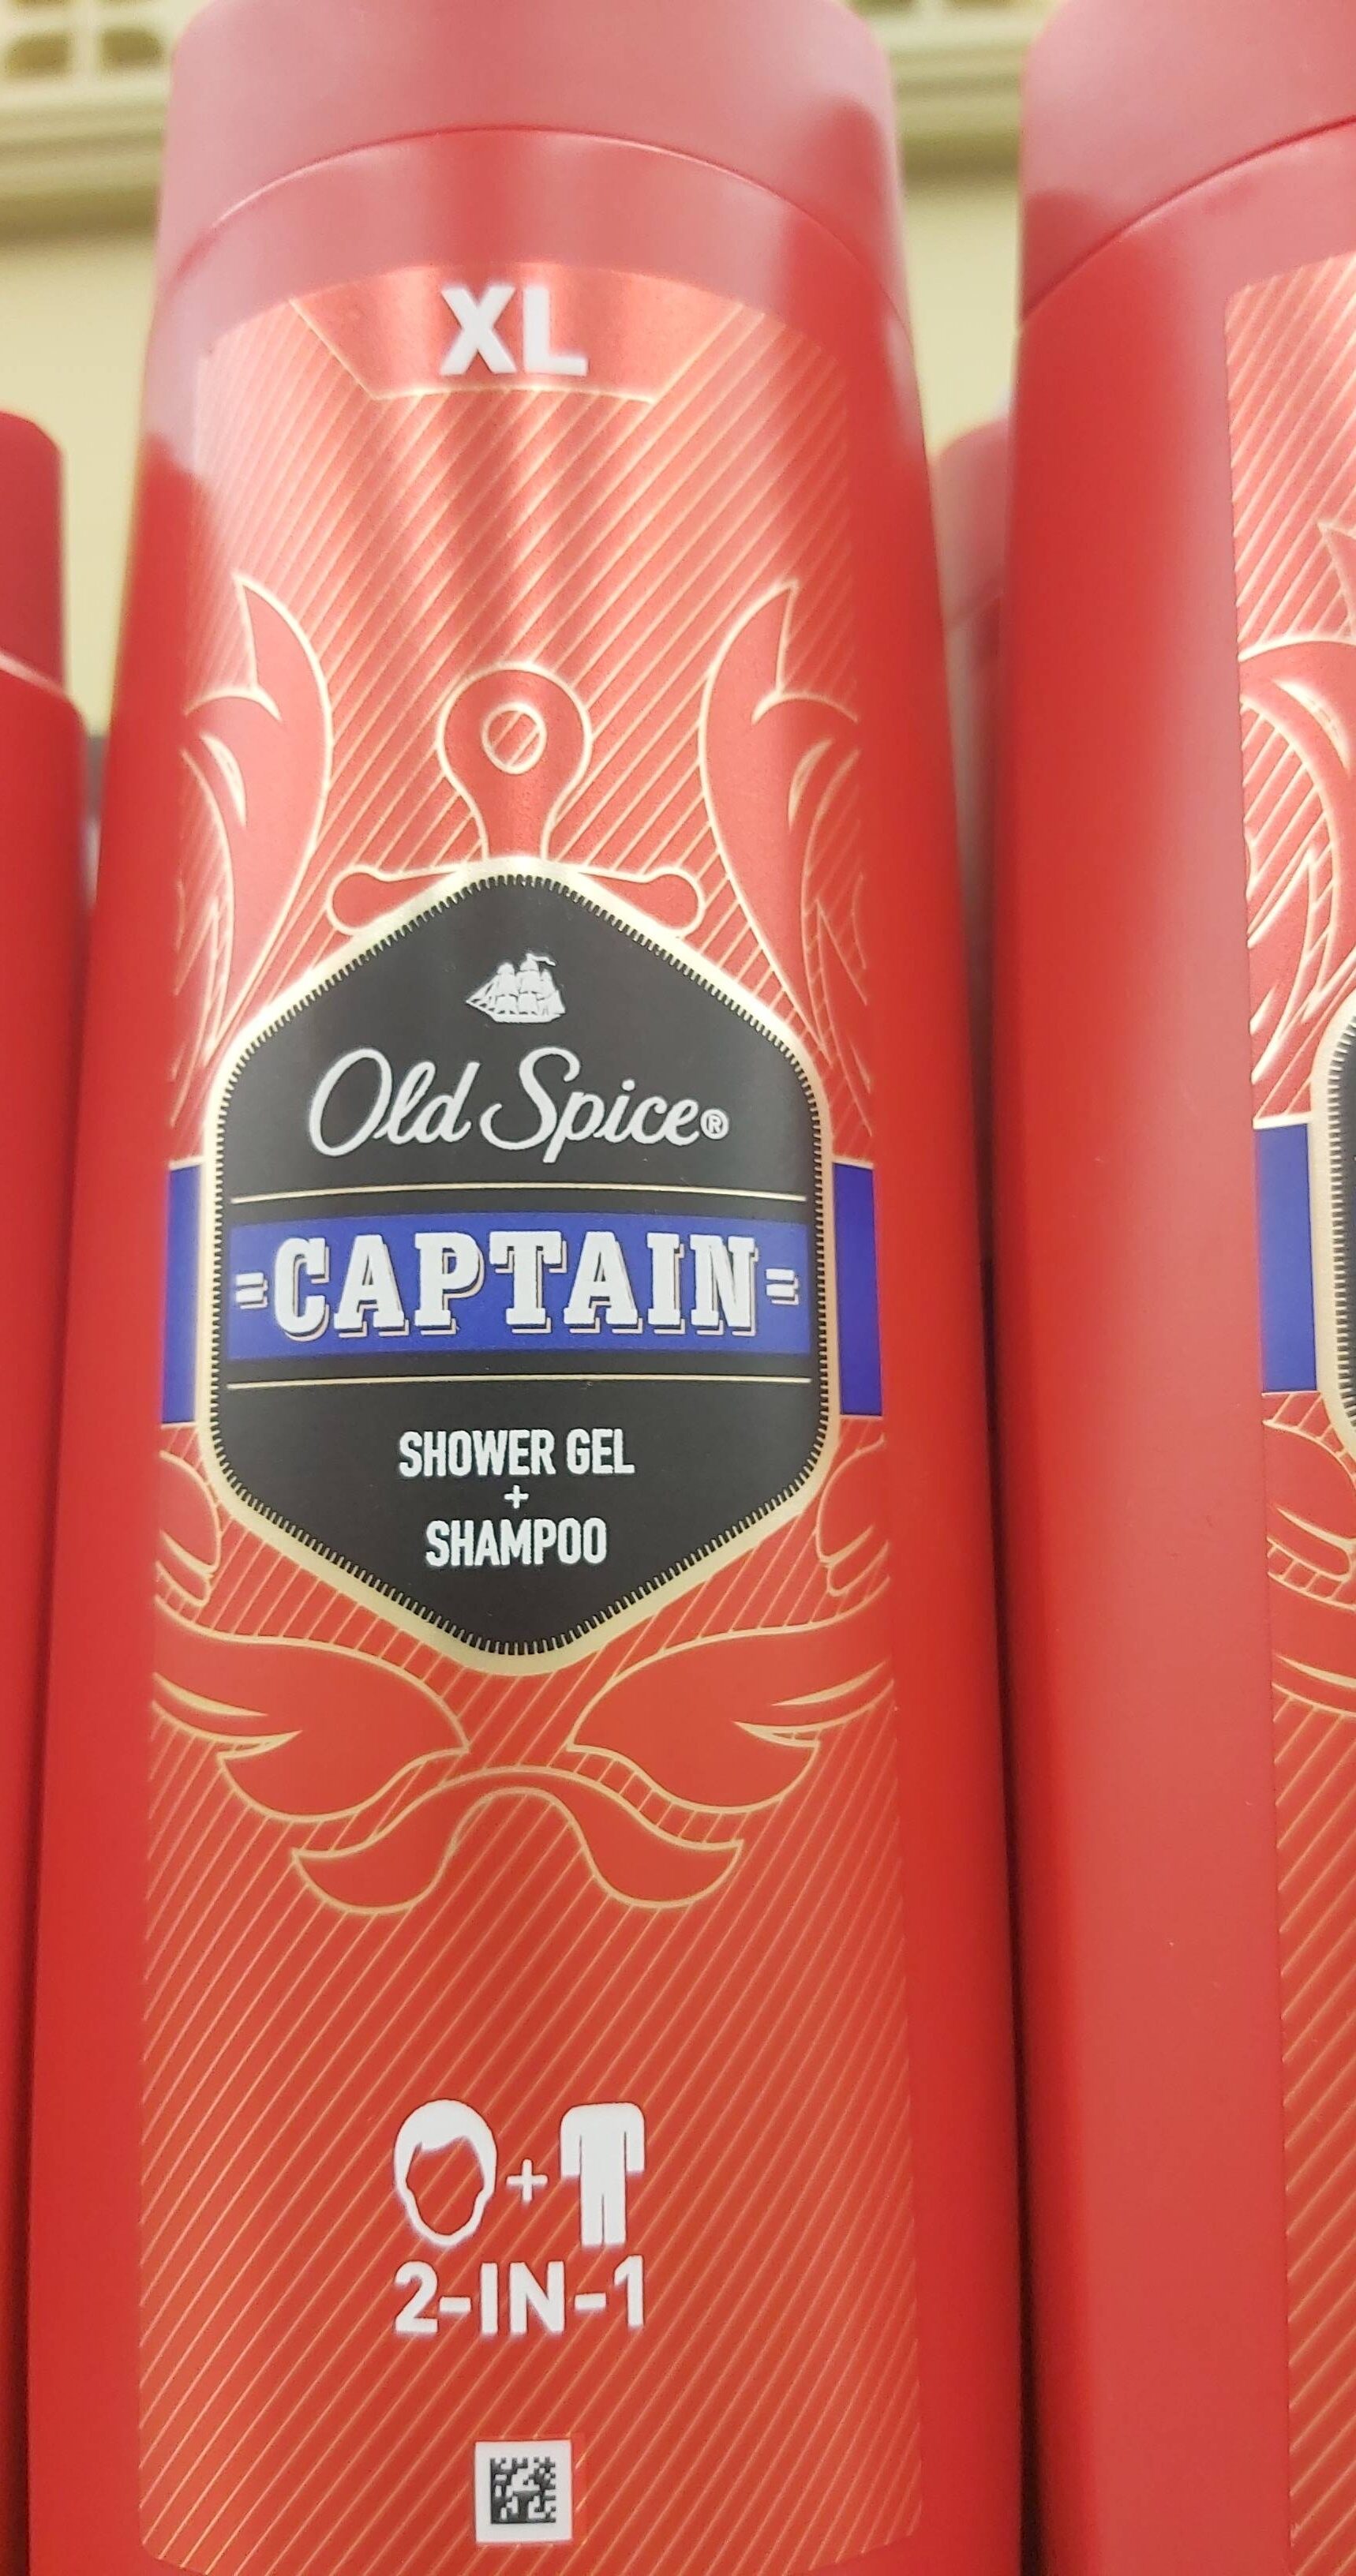 Old spice - Product - en